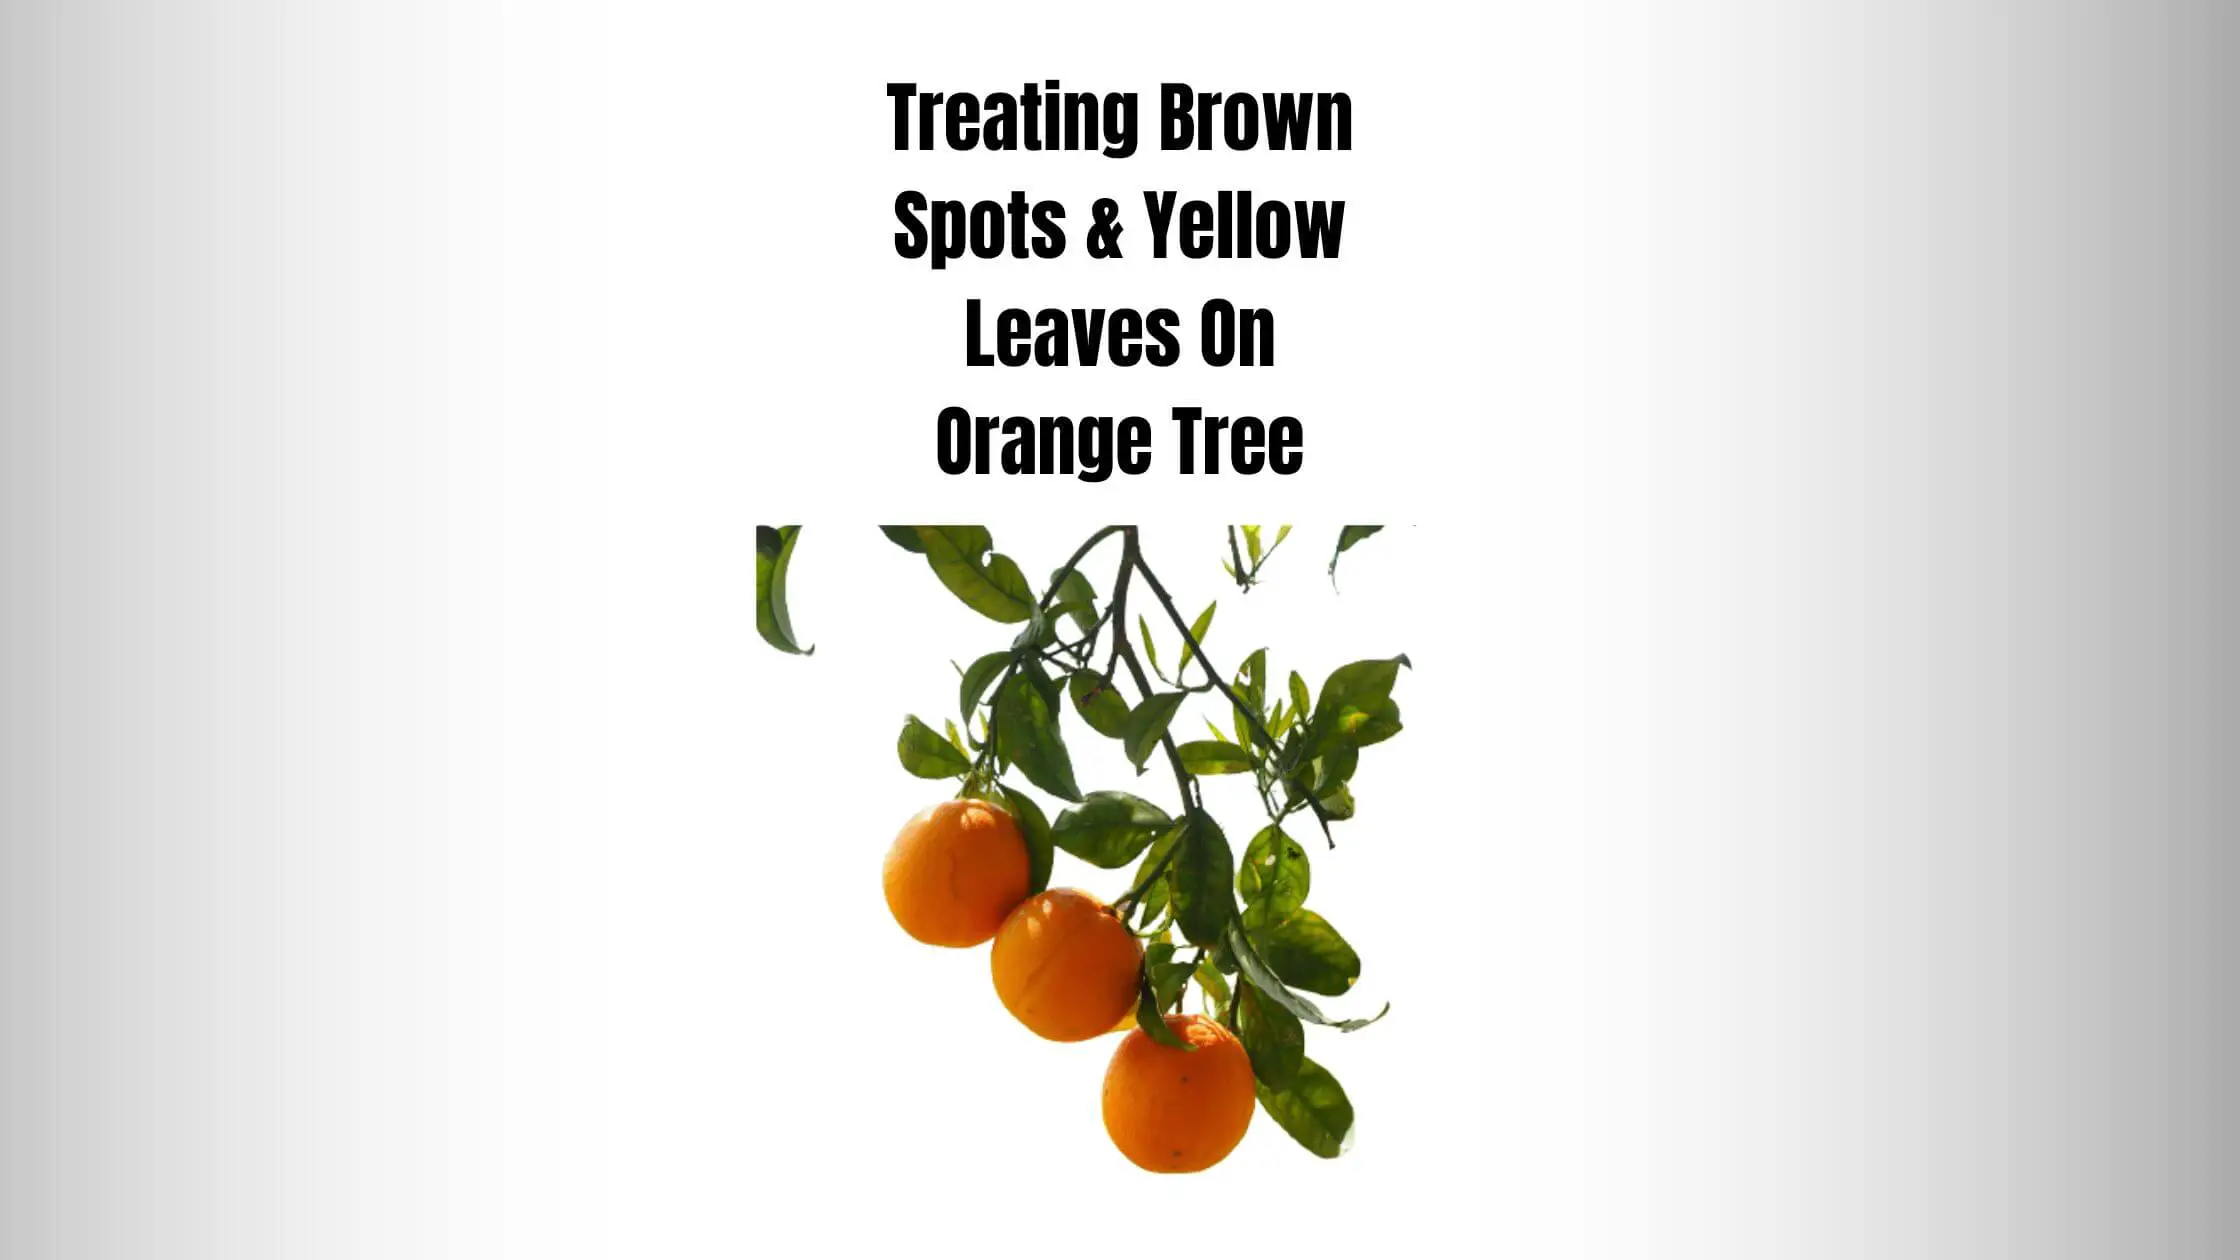 Treating Brown Spots & Yellow Leaves On Orange Tree